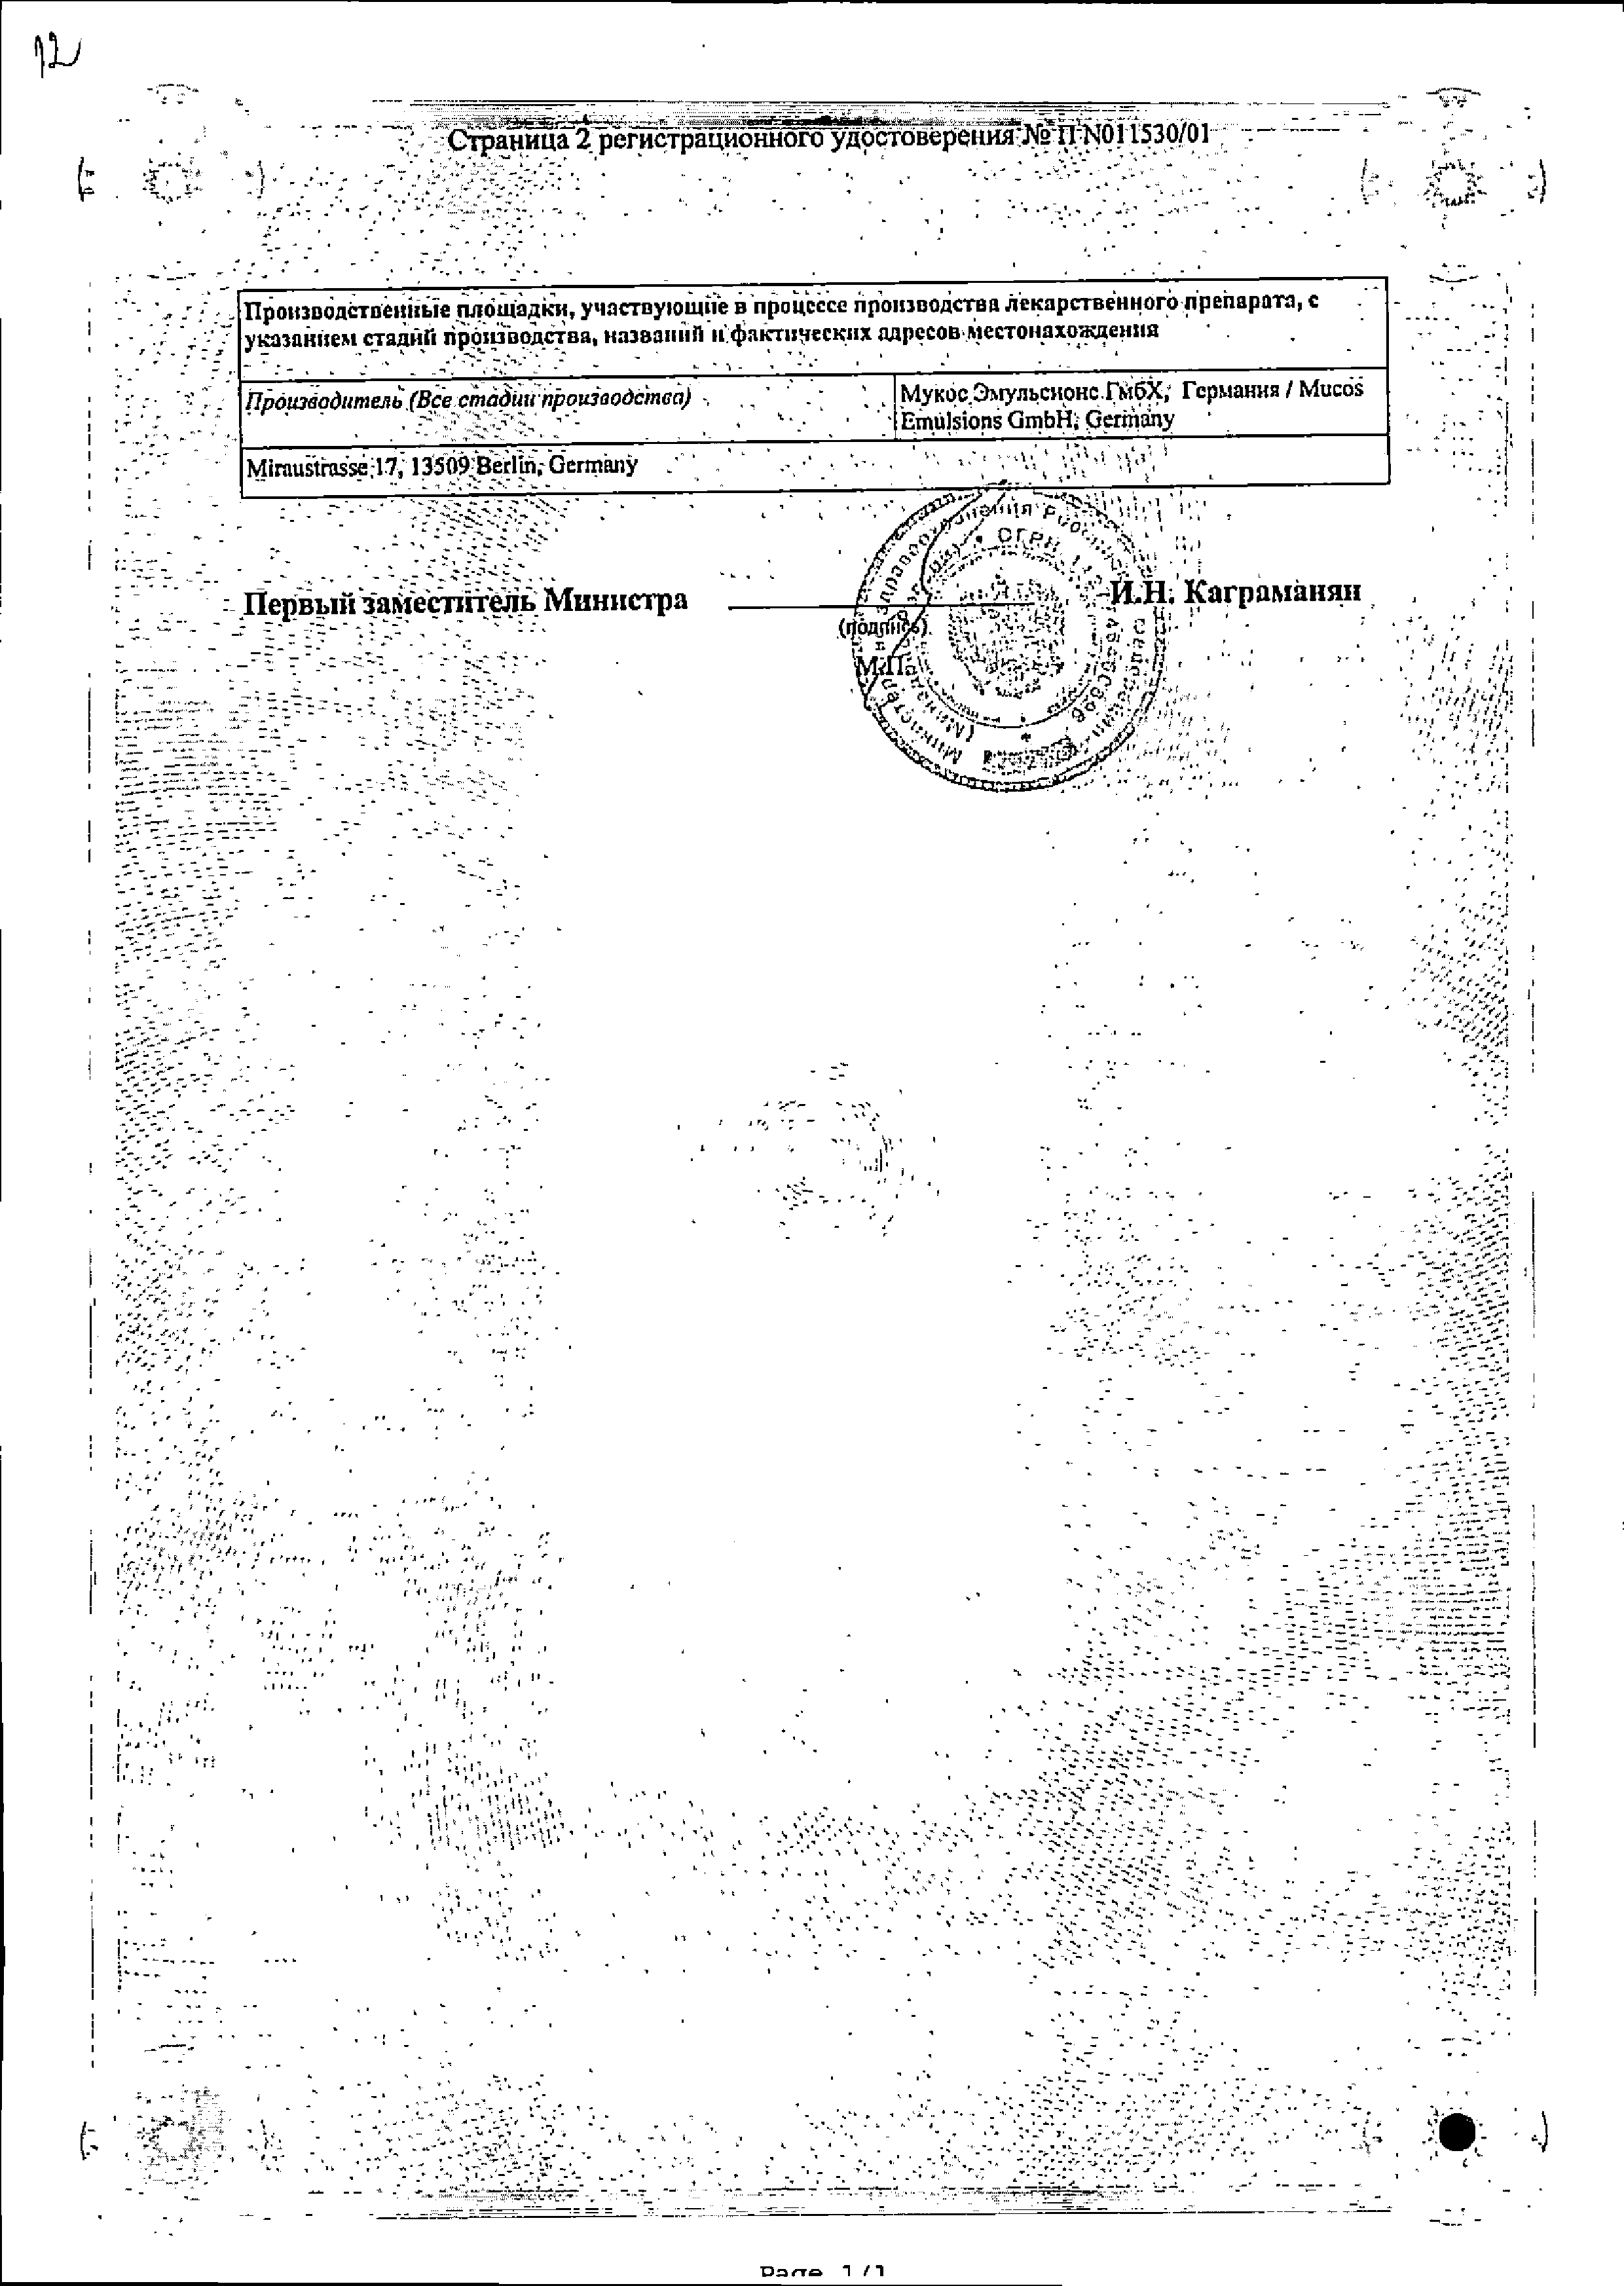 Вобэнзим Wobenzym® сертификат